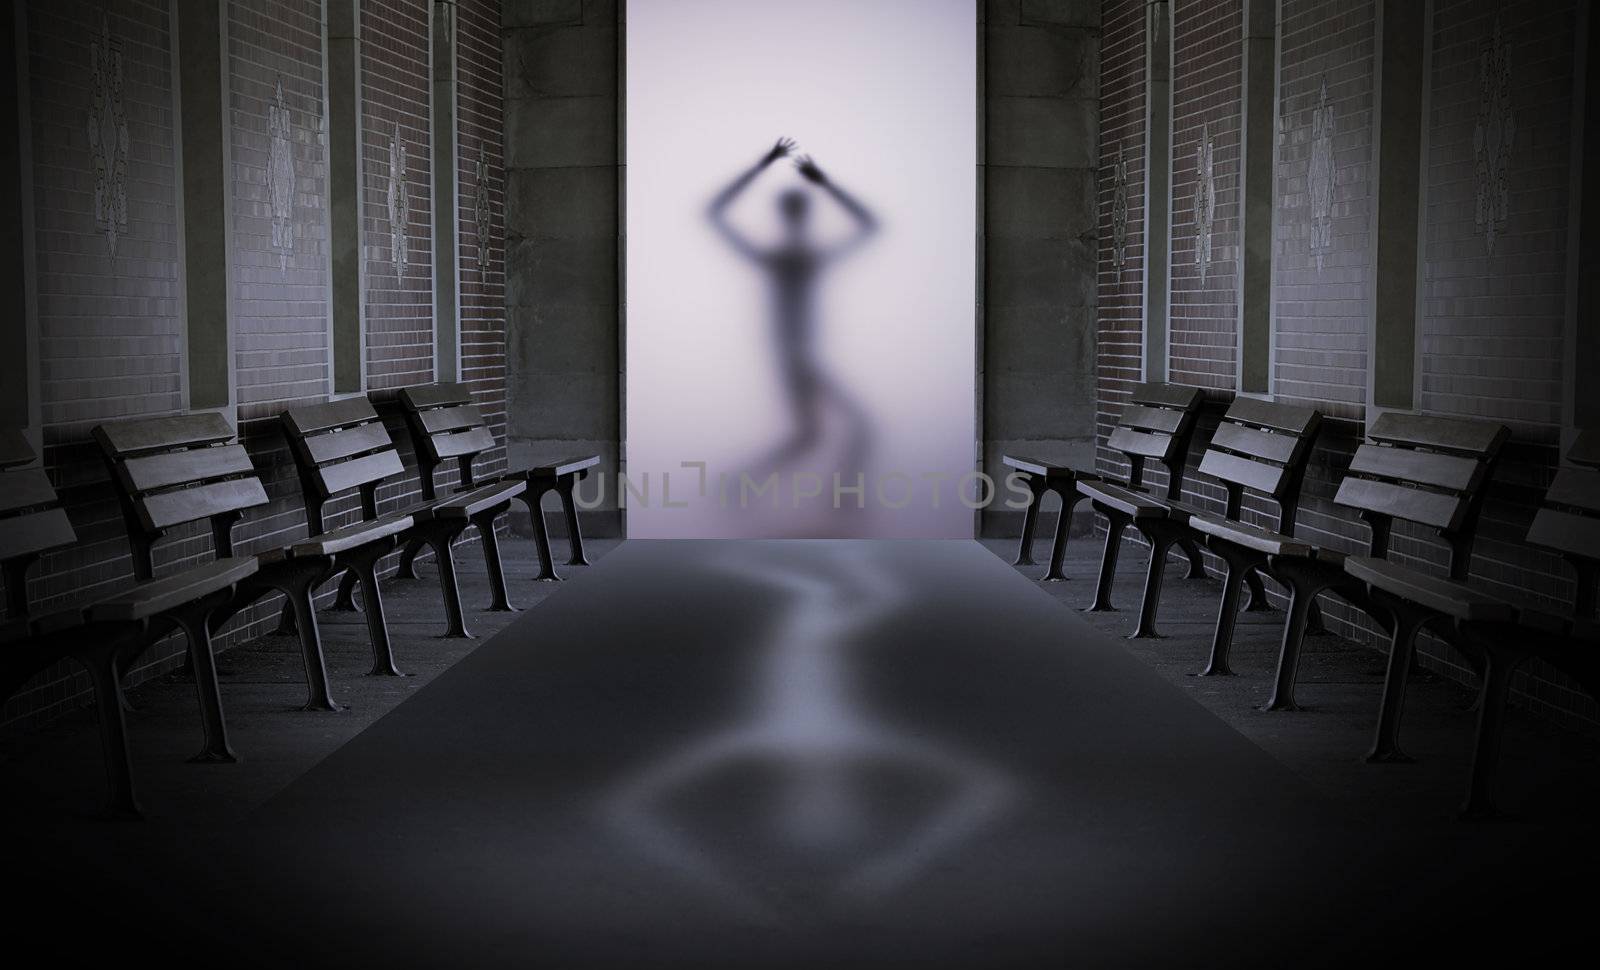 psychic depression room by Hasenonkel